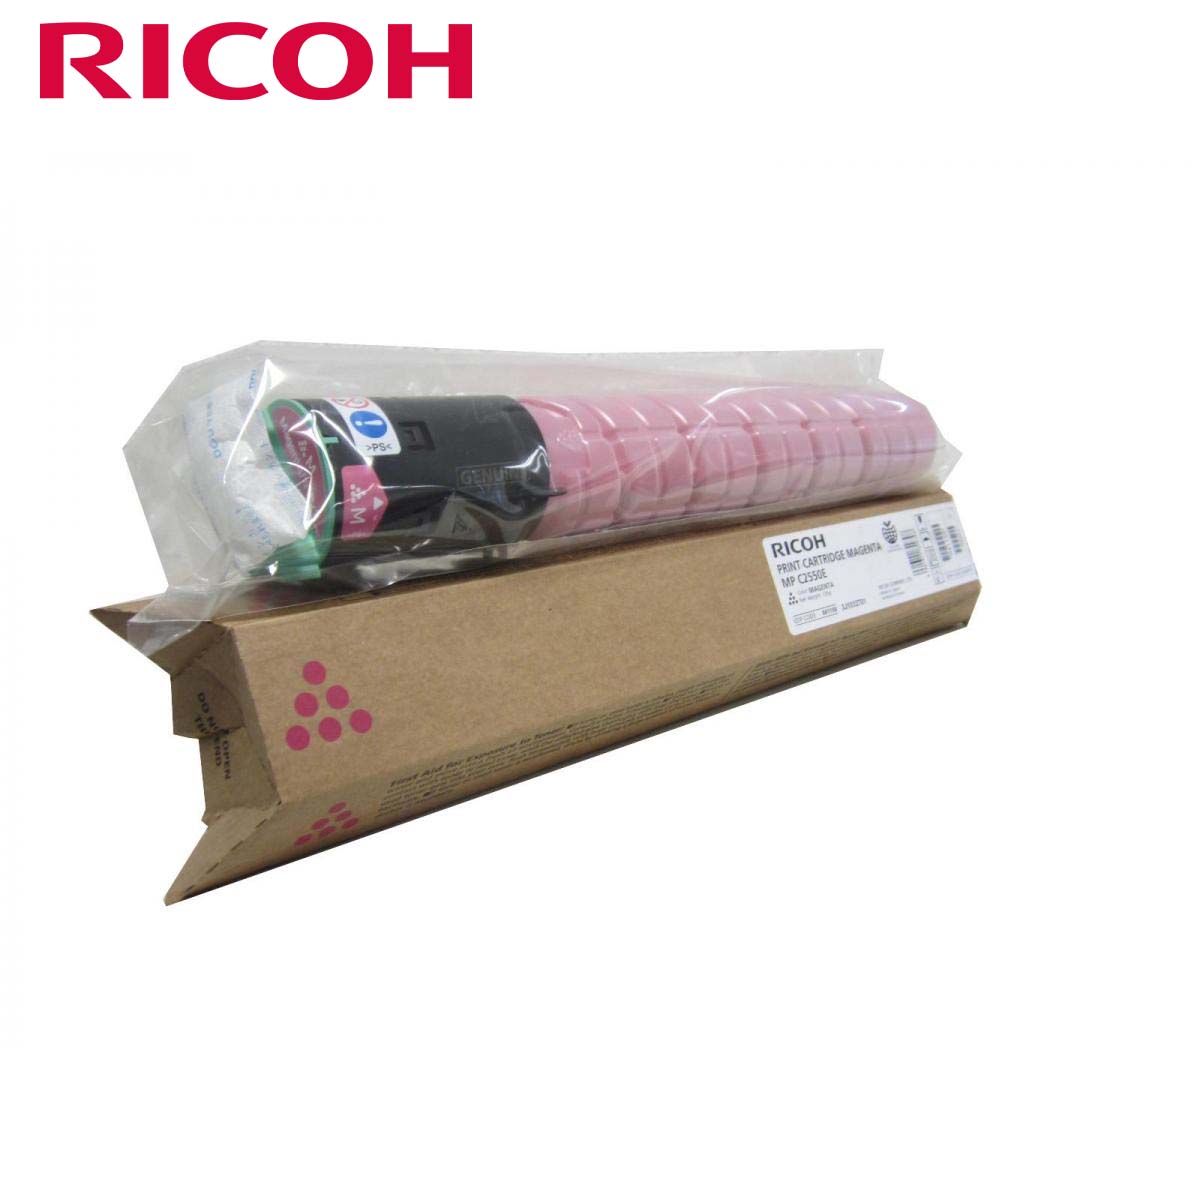 Ricoh 842059 Laser Toner Cartridge Magenta (Original)